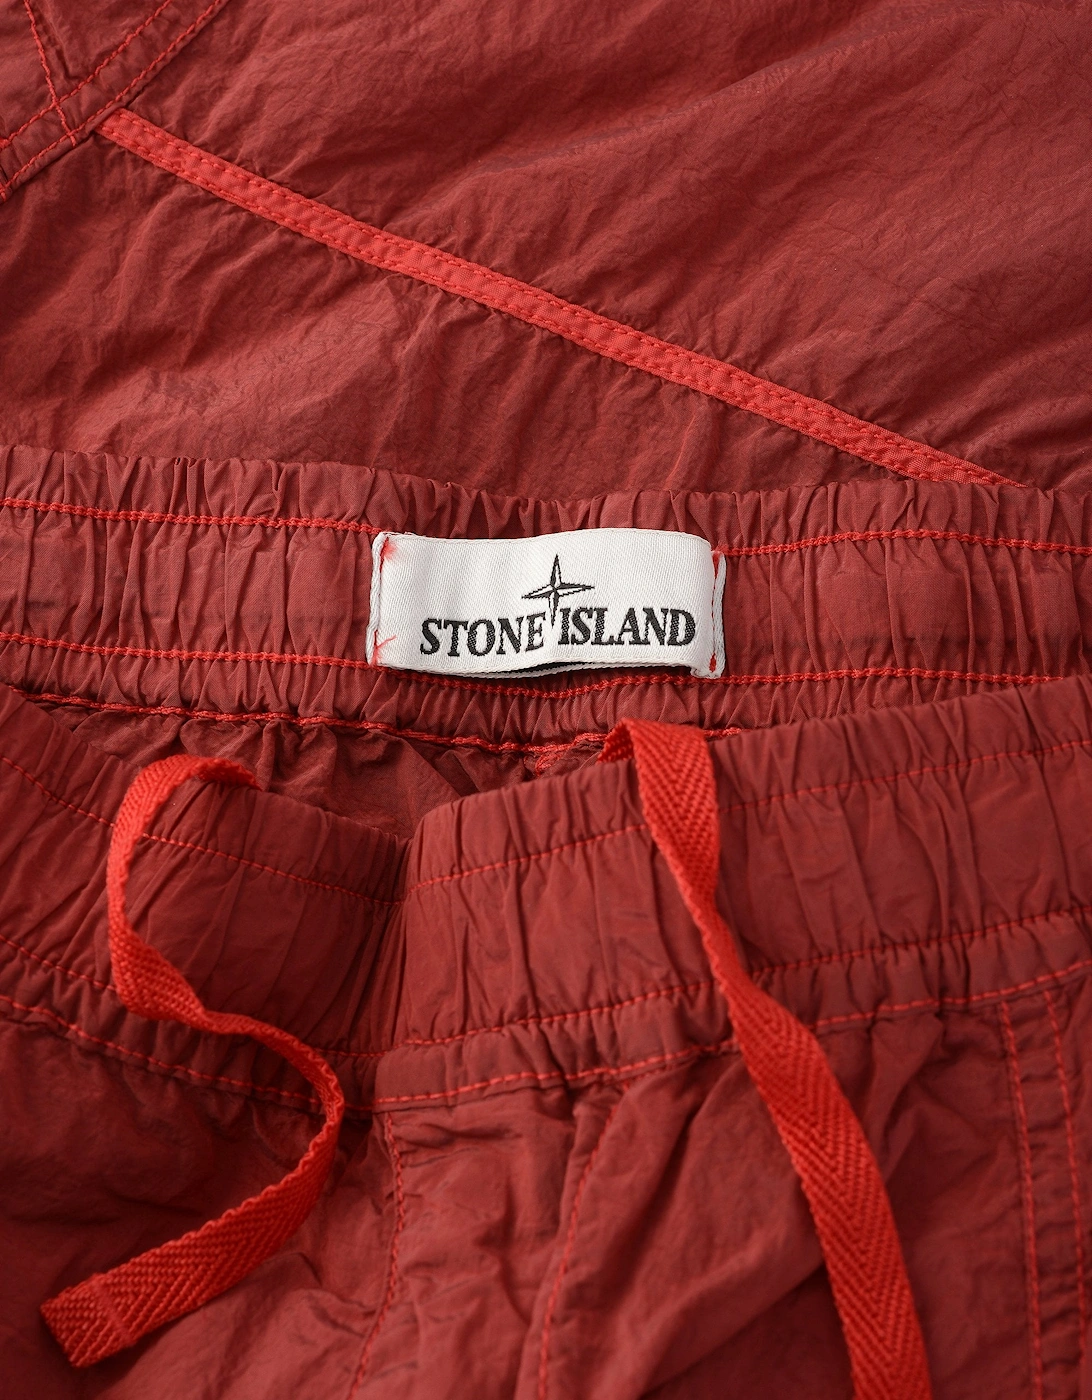 Nylon Metal Cuffed Pants Red